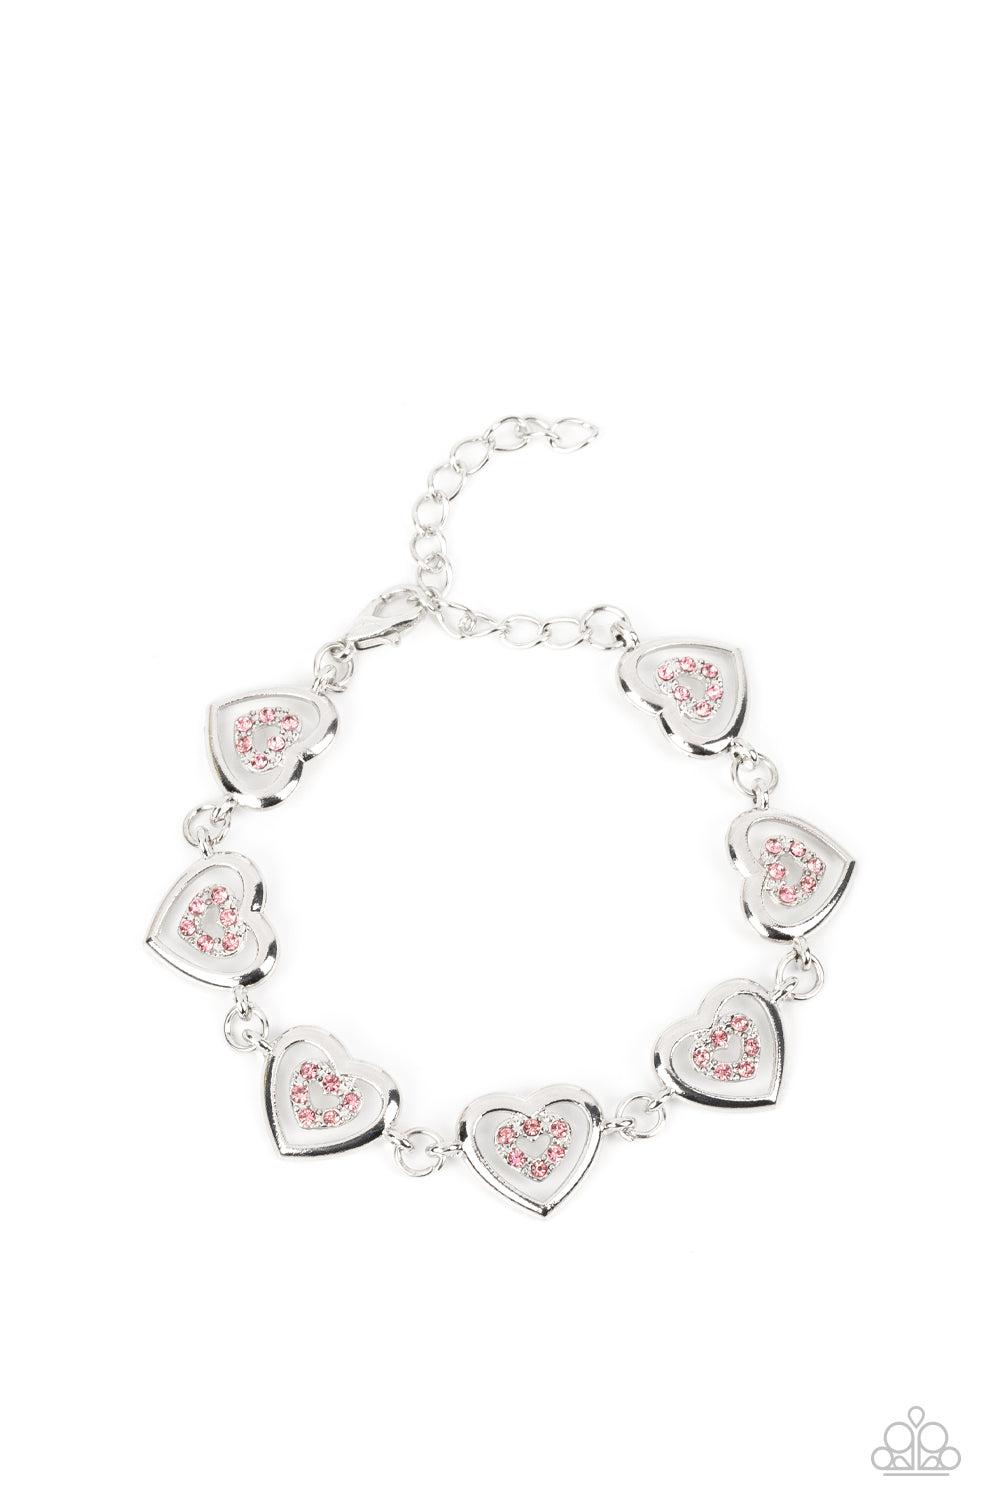 Catching Feelings Pink Rhinestone Heart Bracelet - Paparazzi Accessories- lightbox - CarasShop.com - $5 Jewelry by Cara Jewels